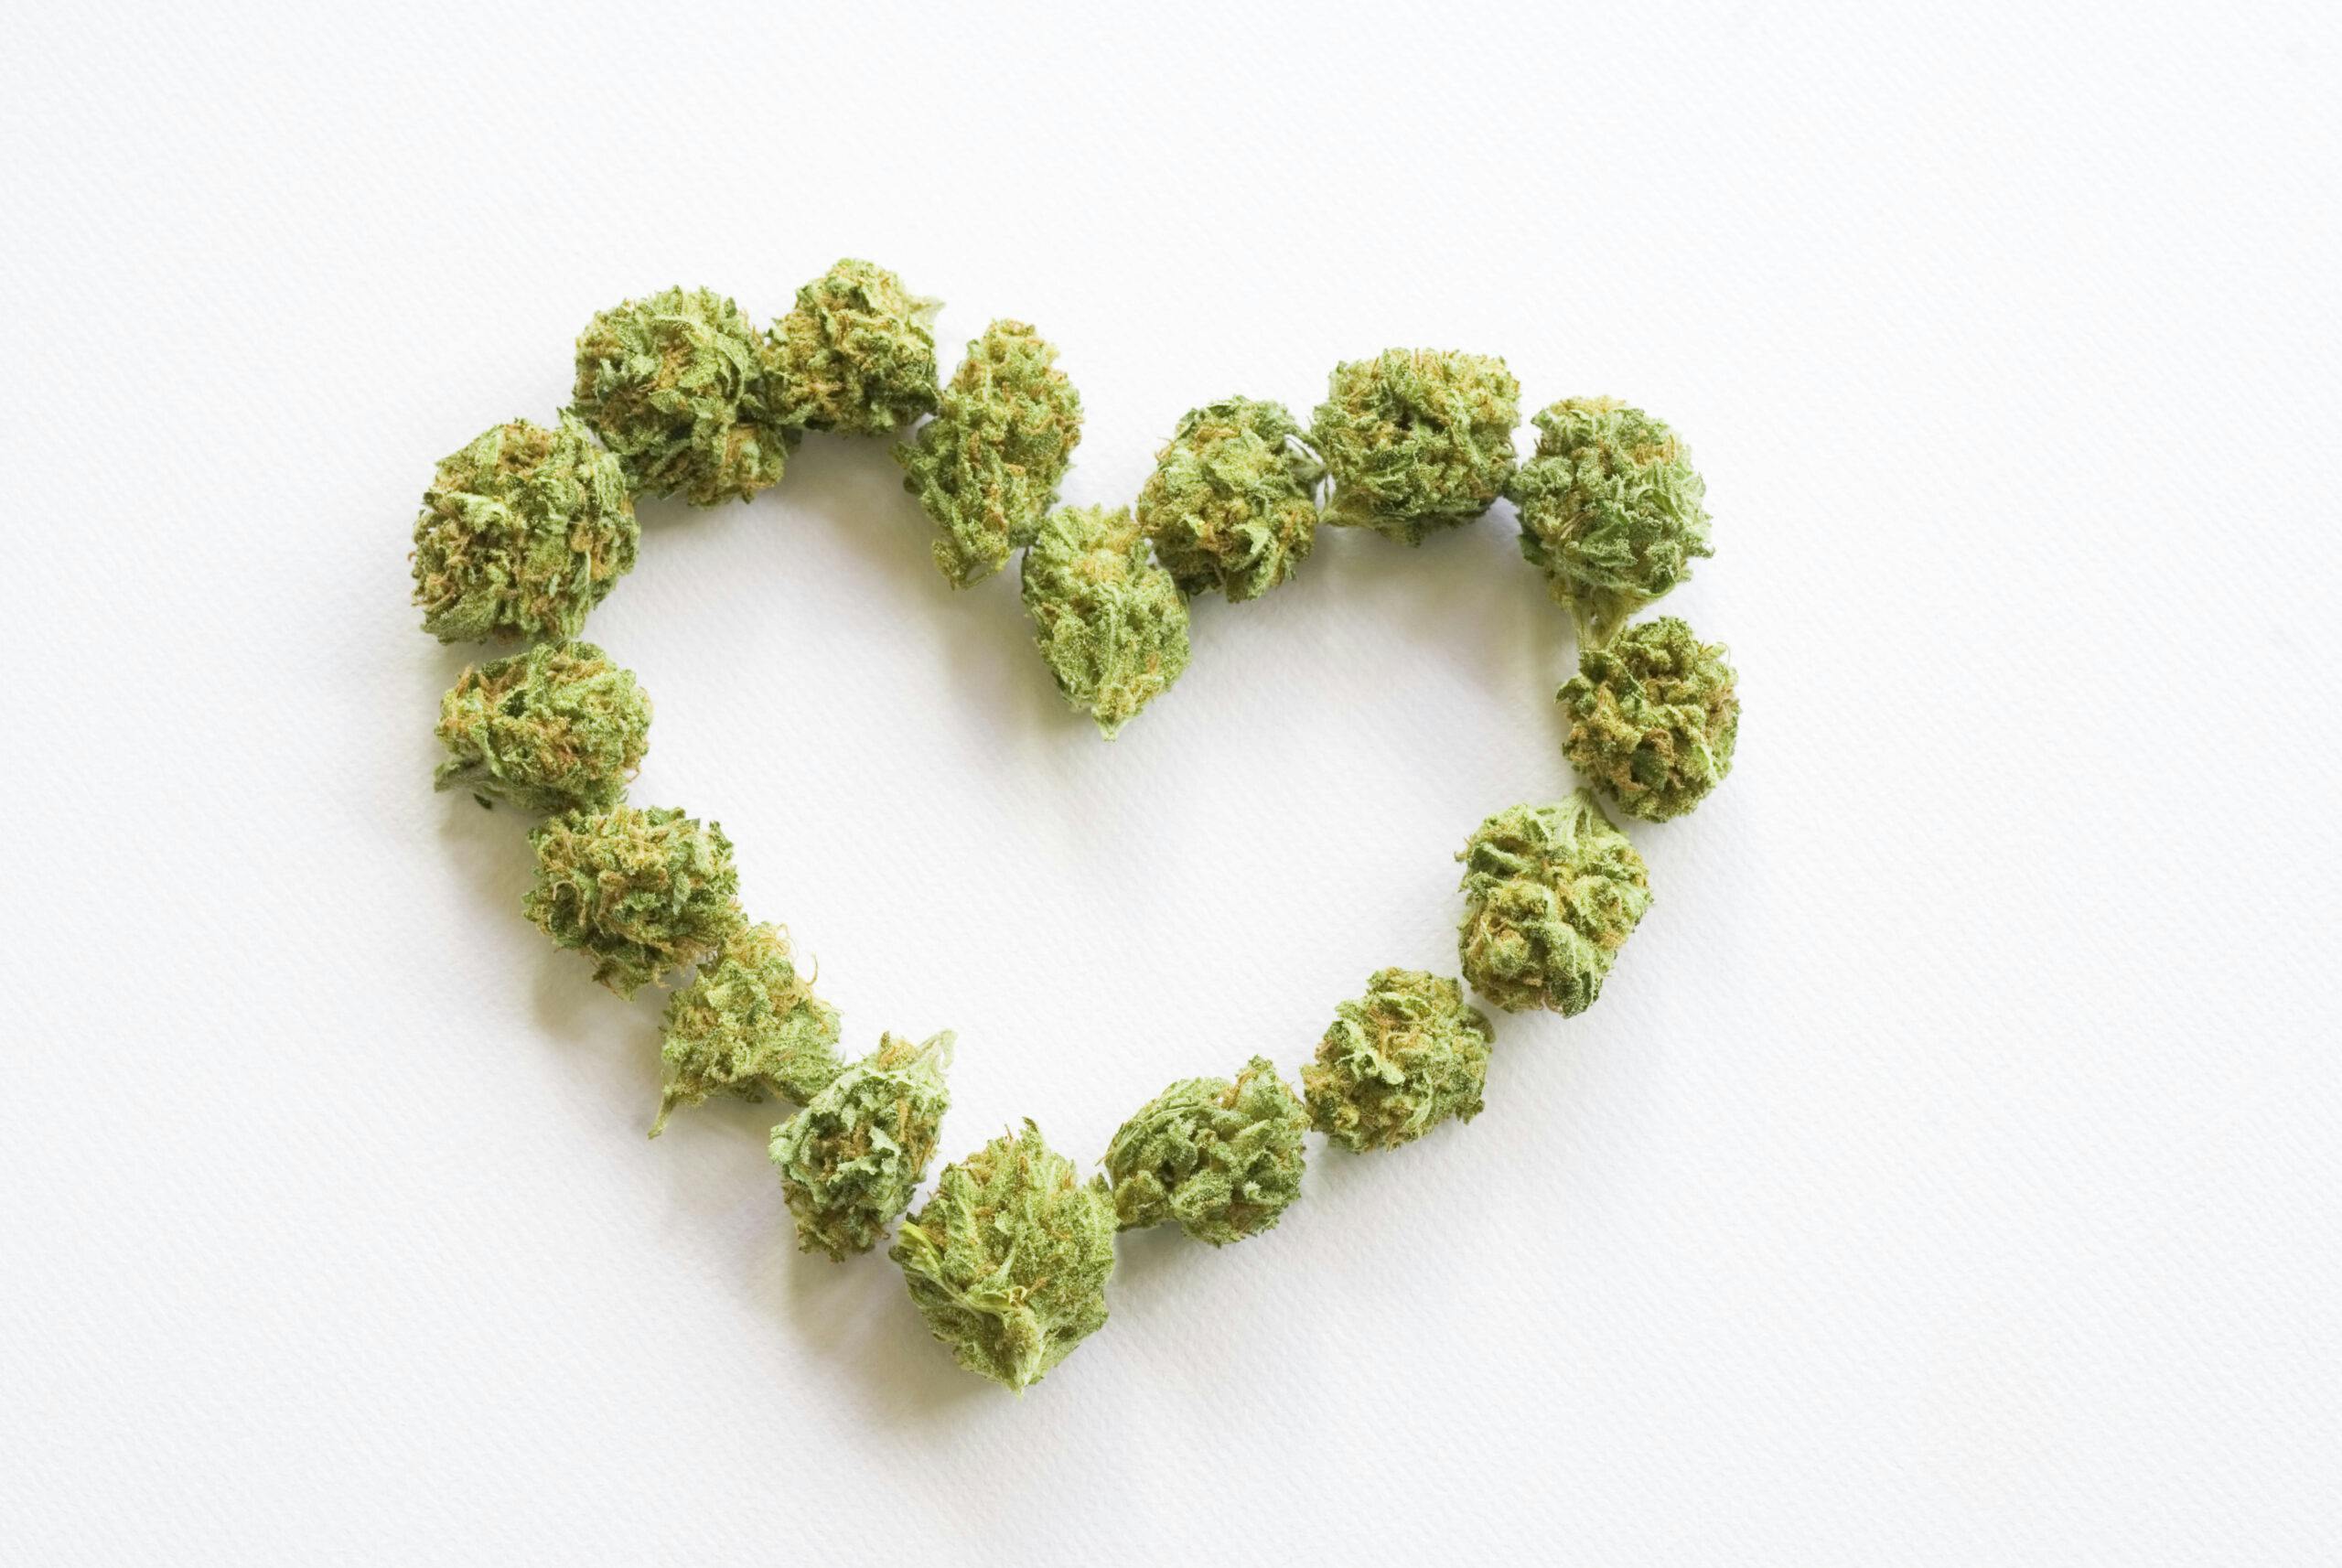 marijuana buds in a heart shape